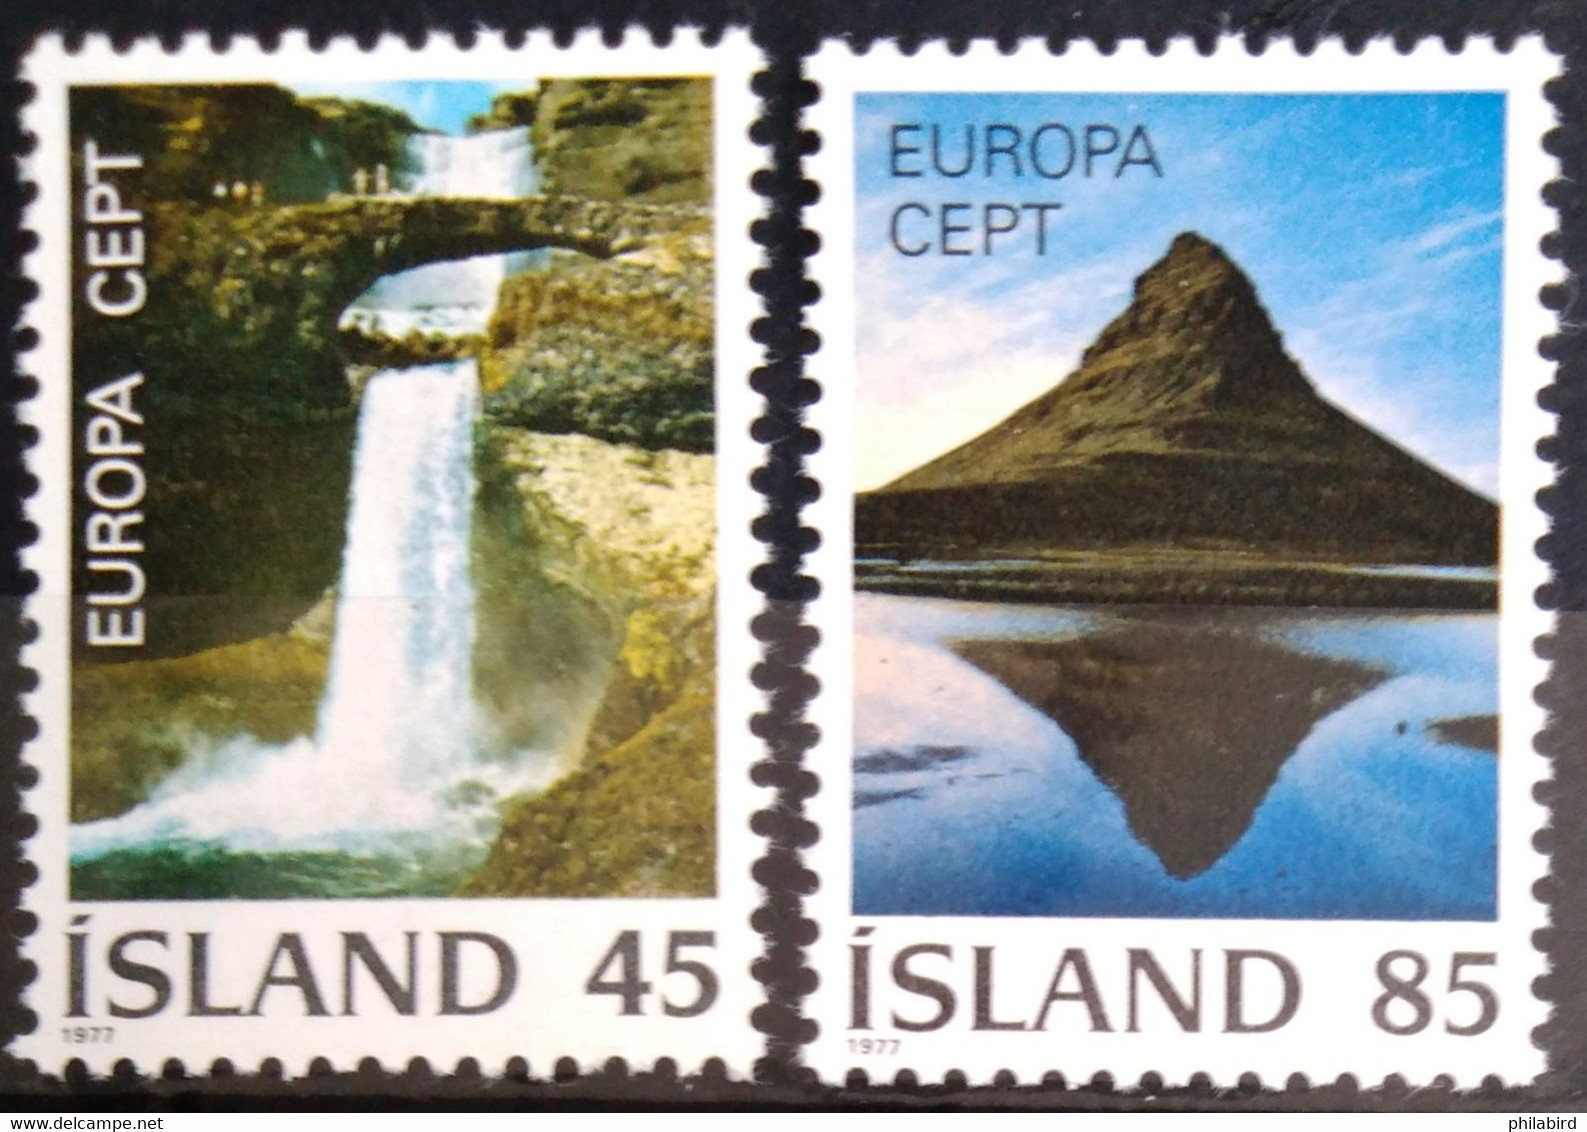 EUROPA 1977 - ISLANDE                    N° 475/476                        NEUF** - 1977